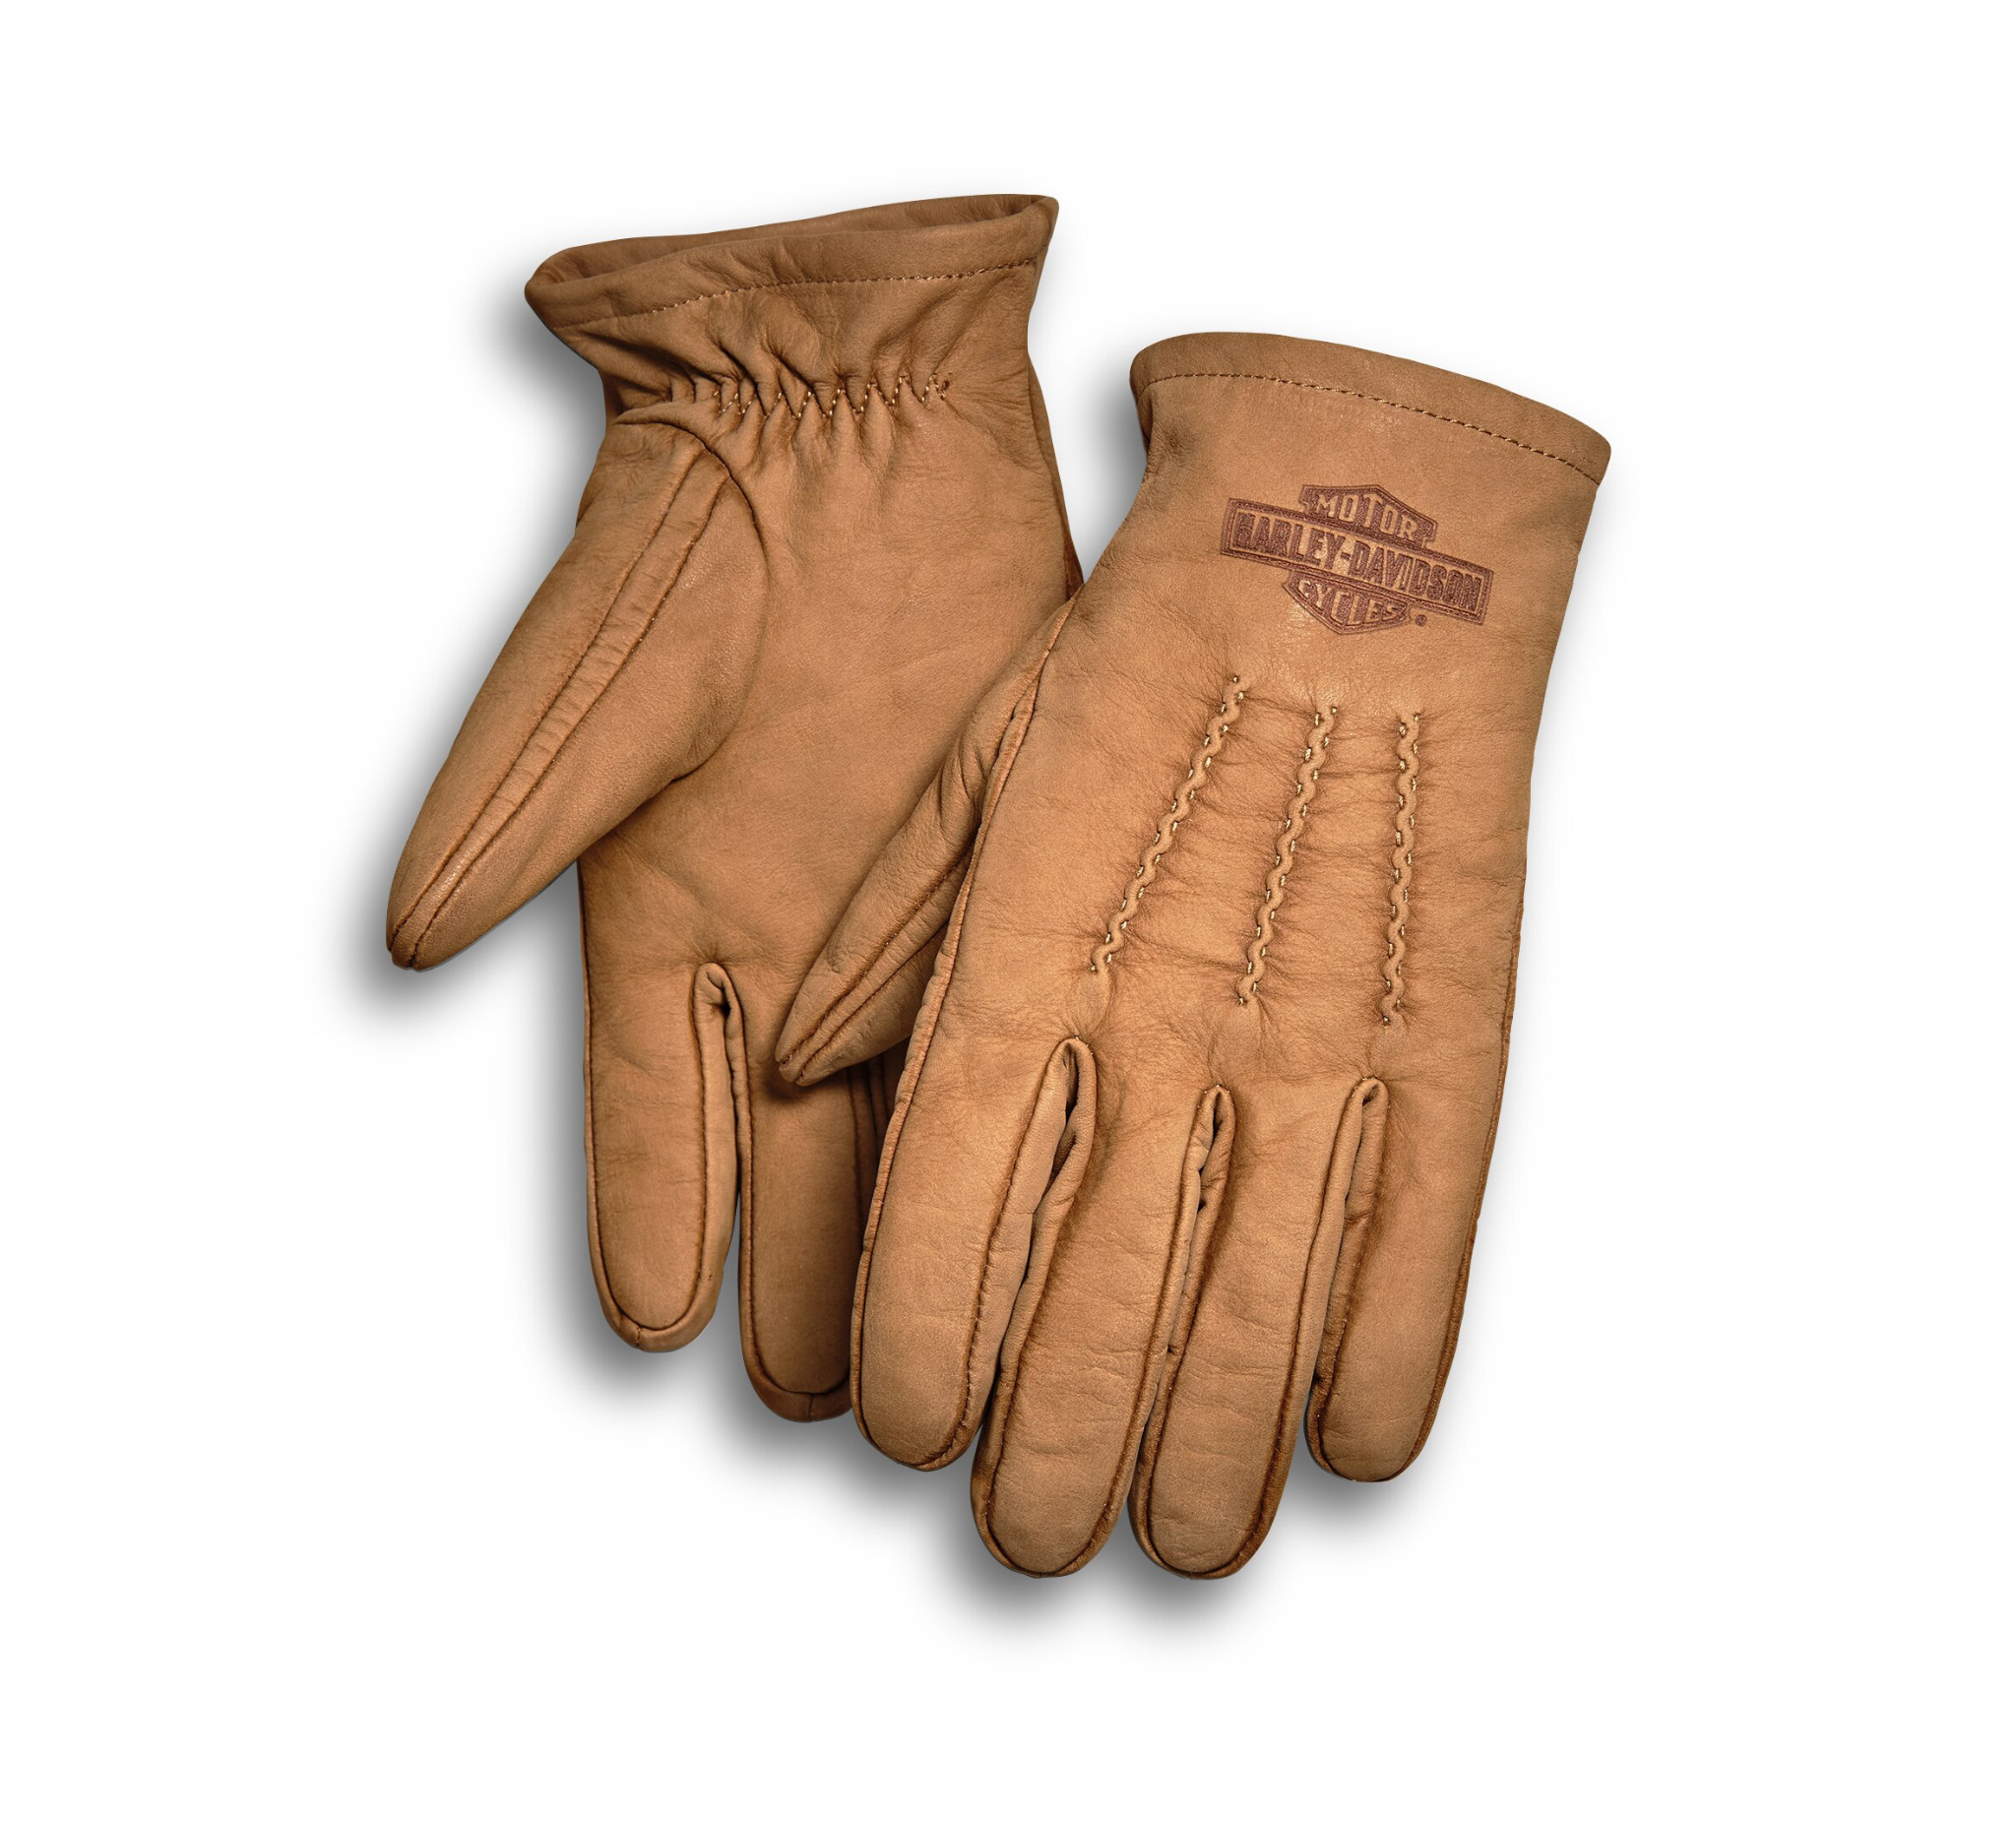 98356 17em Harley Davidson Enthusiast Leather Gloves Ec At Thunderbike Shop